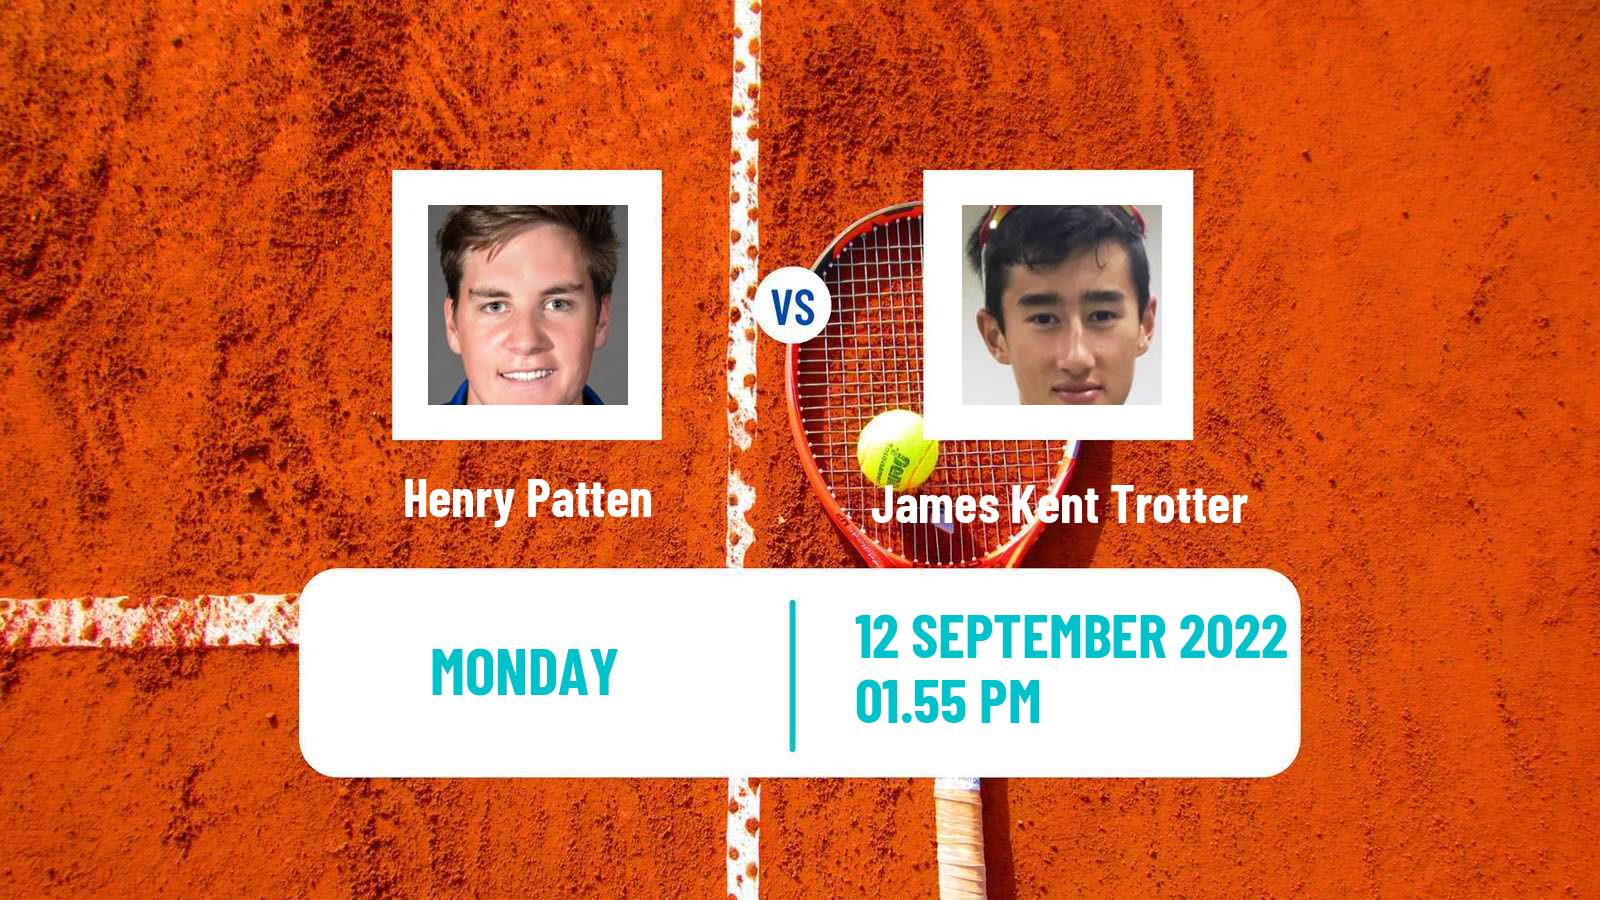 Tennis ATP Challenger Henry Patten - James Kent Trotter